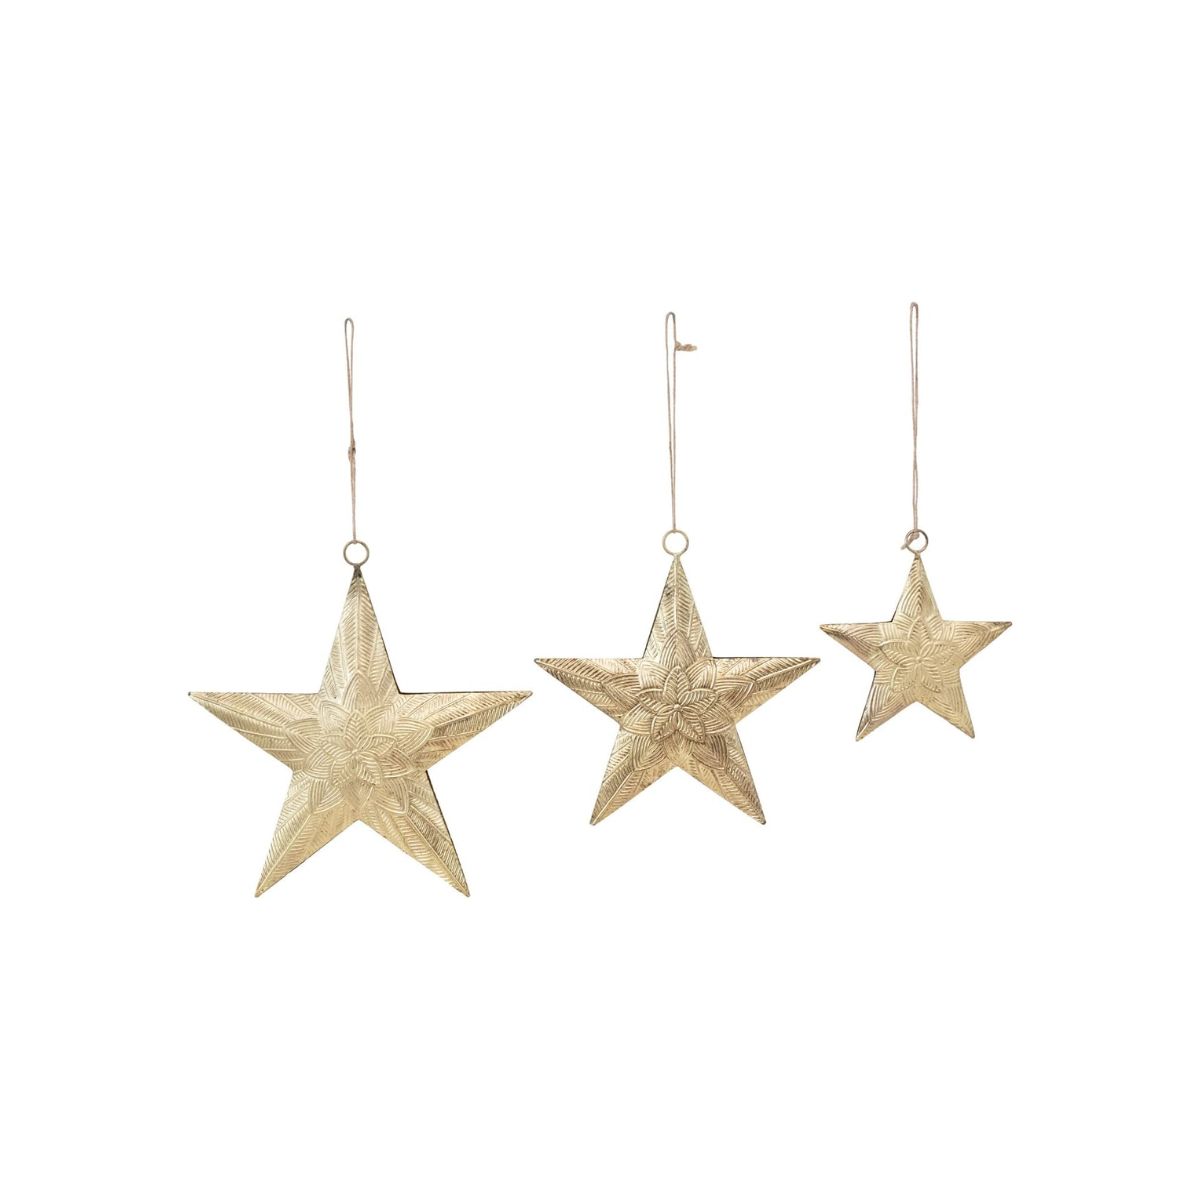 3 gold star ornaments